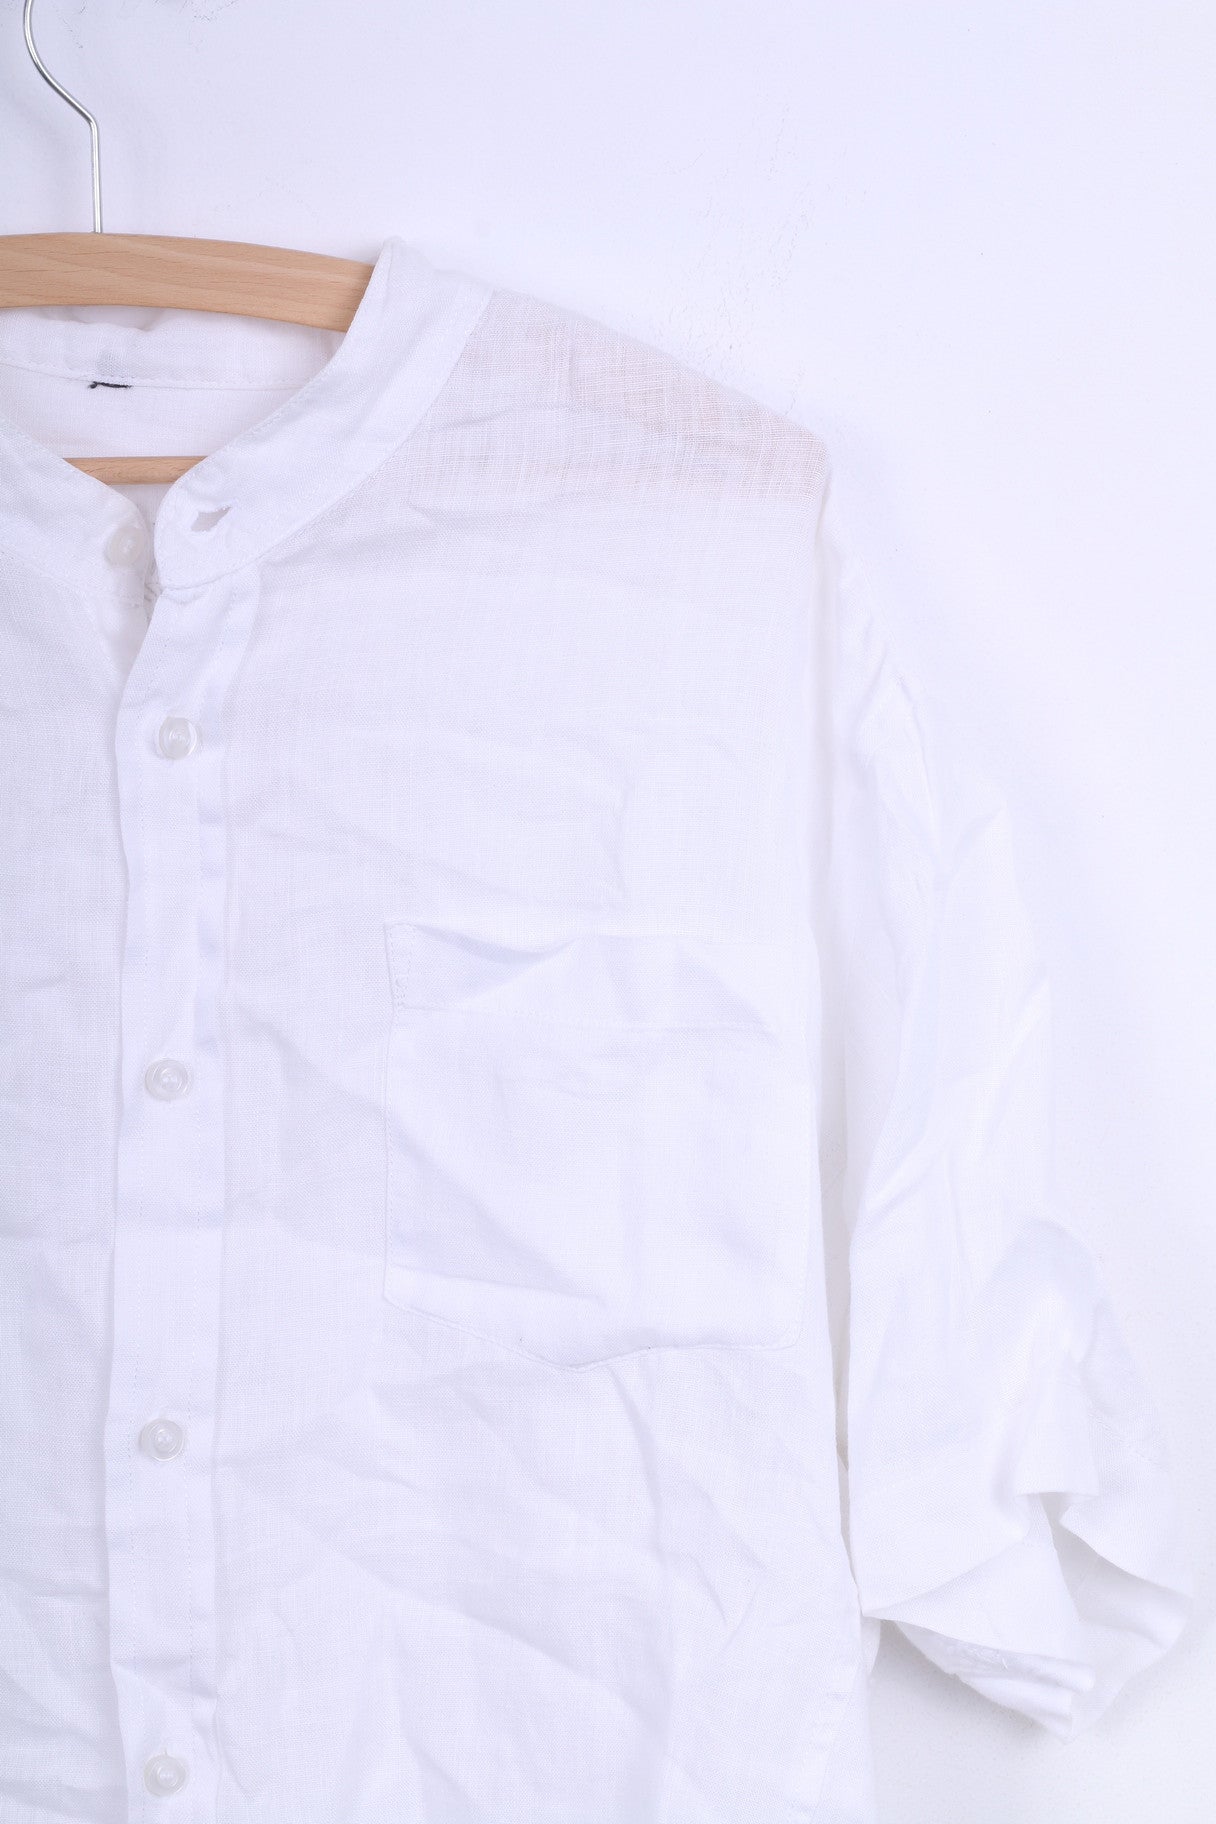 Angelo Litrico C&A Mens XL Casual Shirt White Short Sleeve